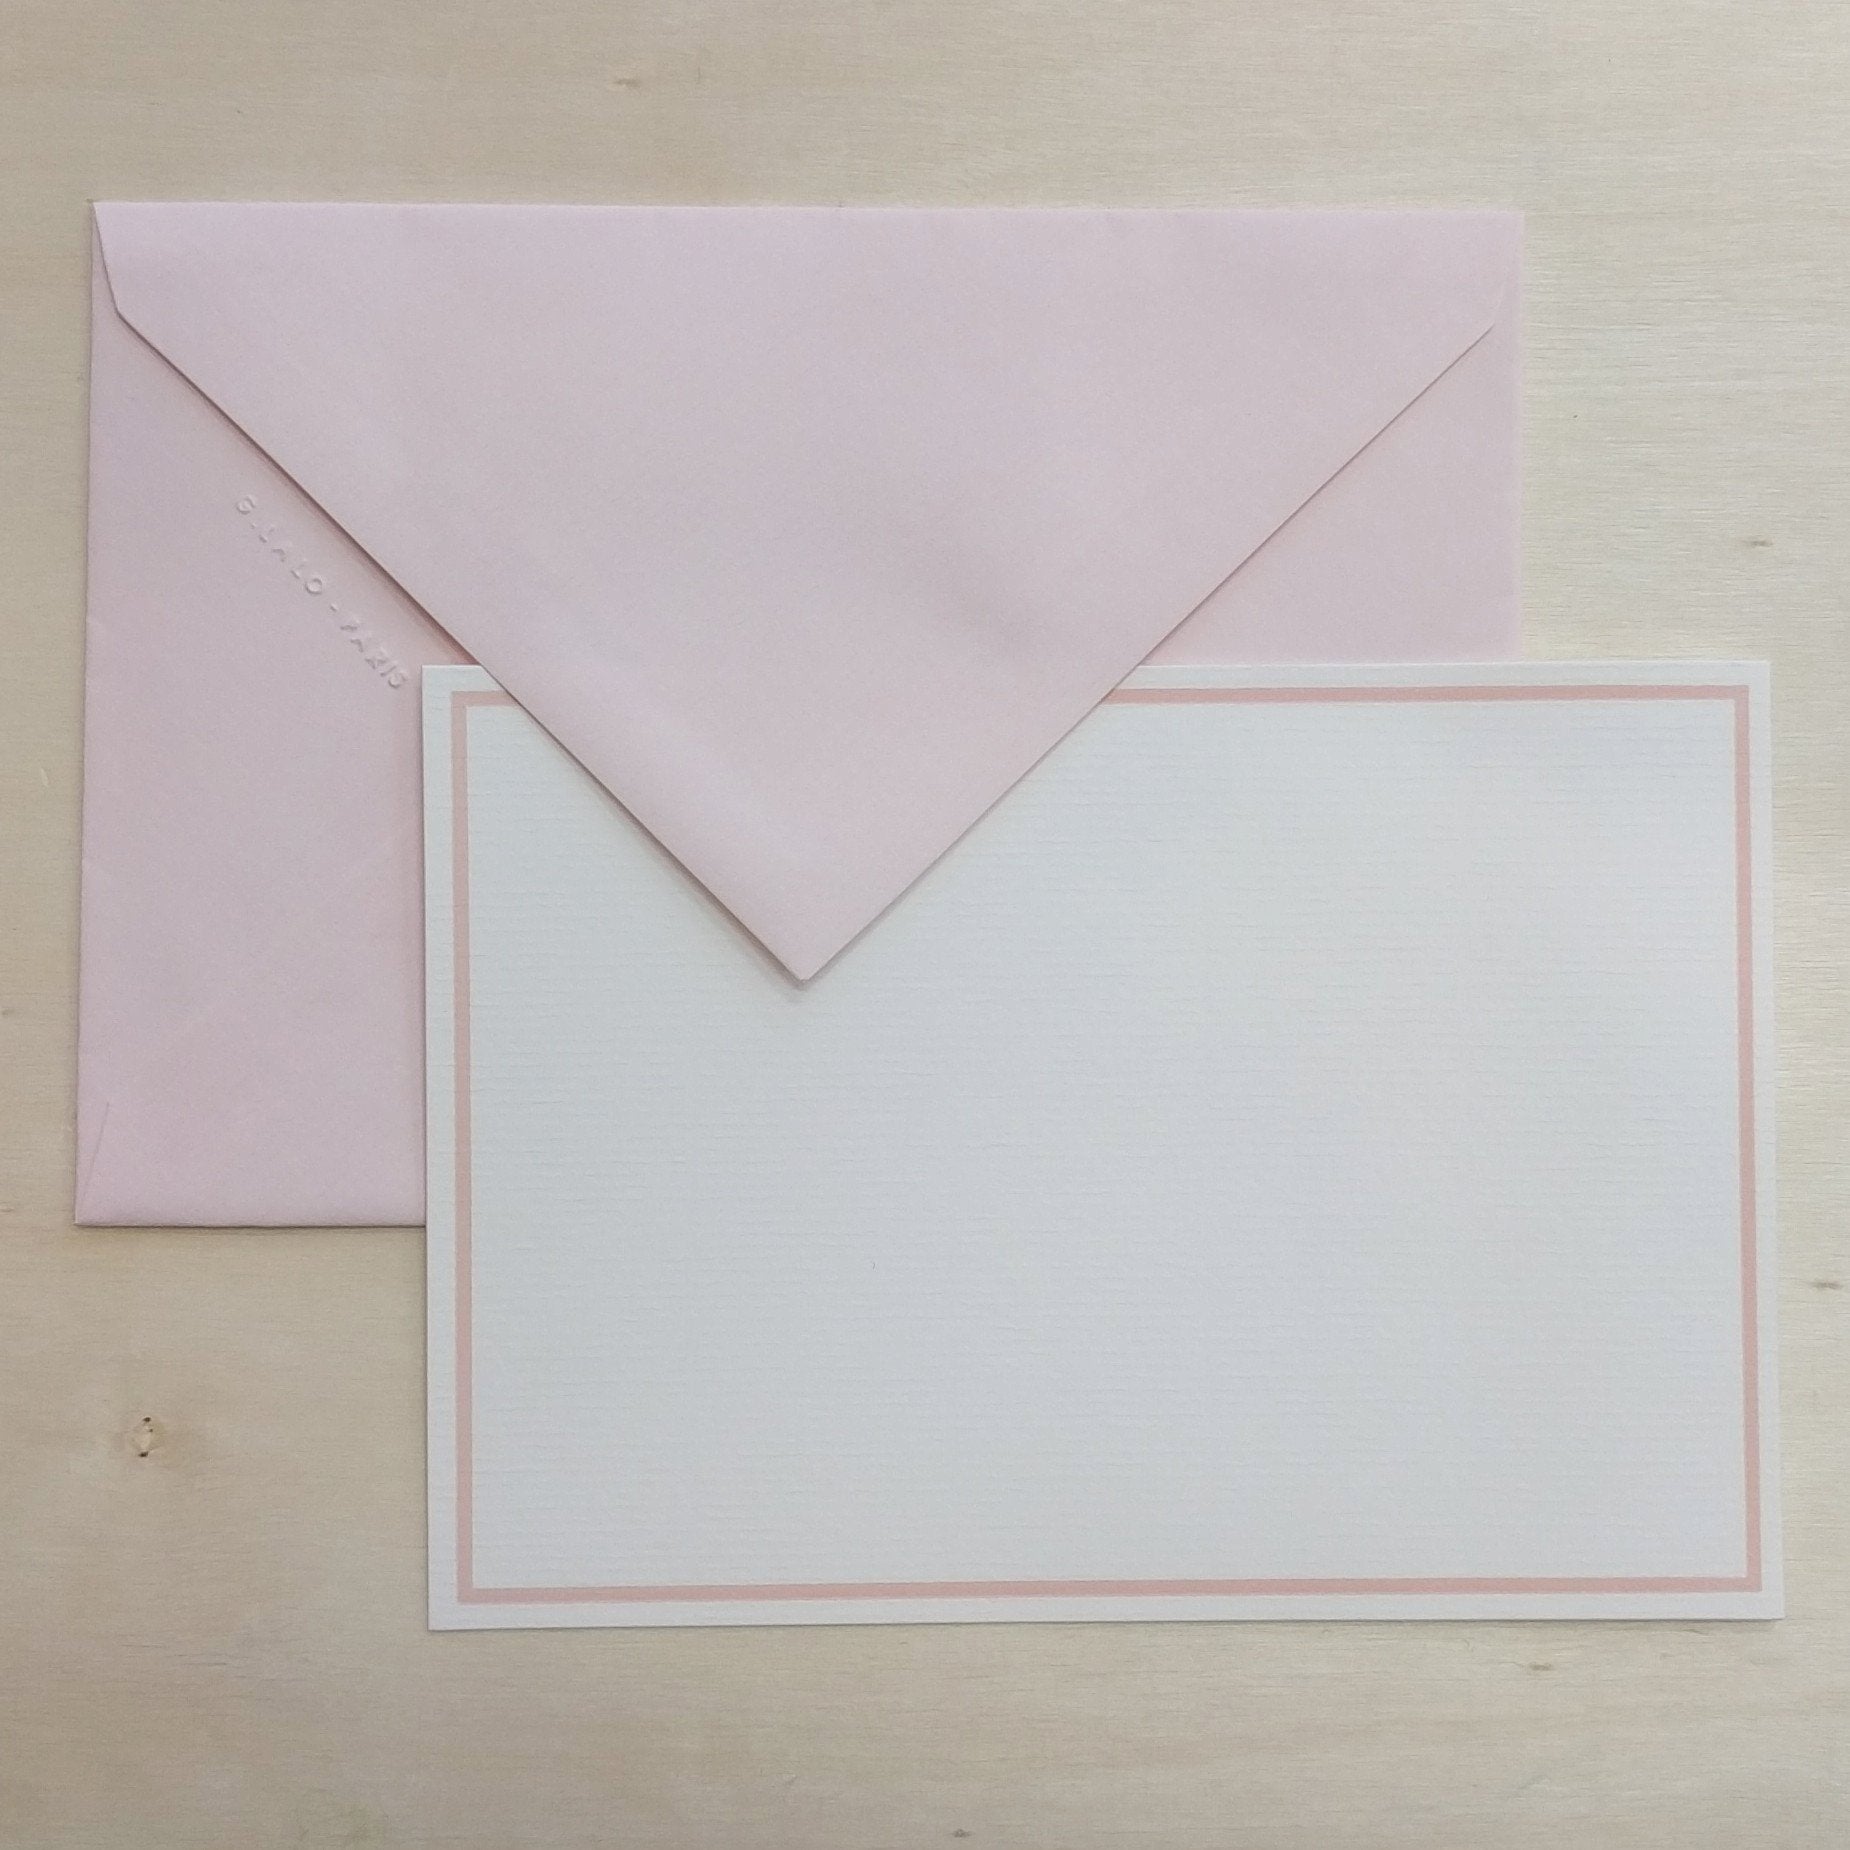 G. Lalo Correspondence Set - A6 Pink